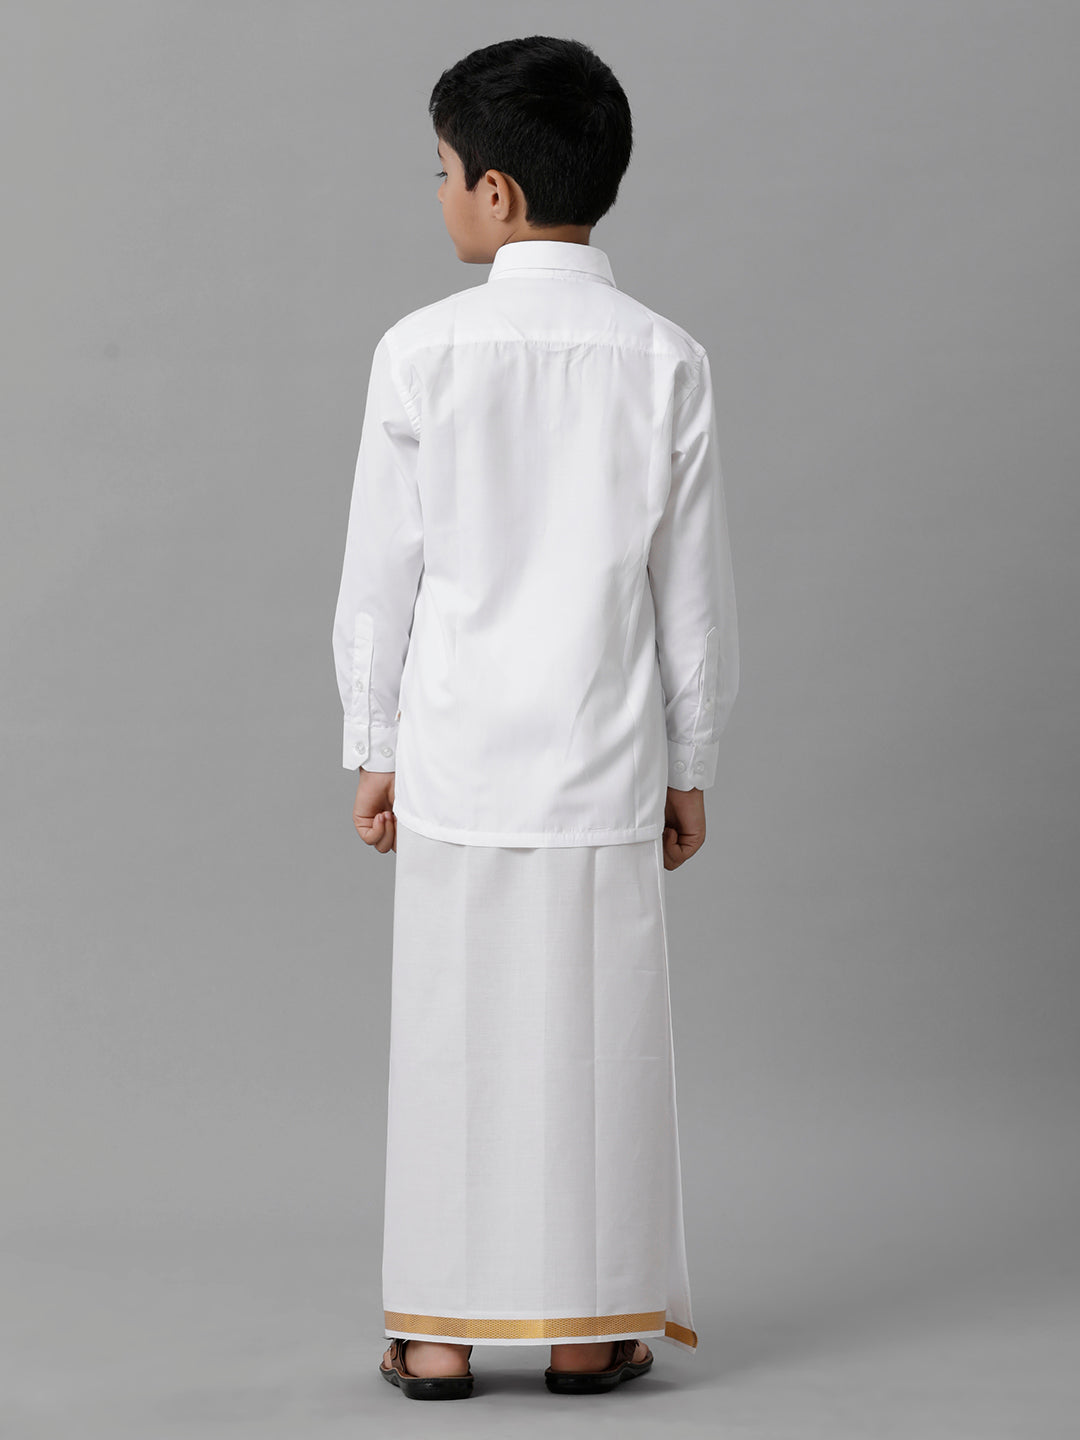 Boys Cotton Shirt with Dhoti Set White Full-Back view